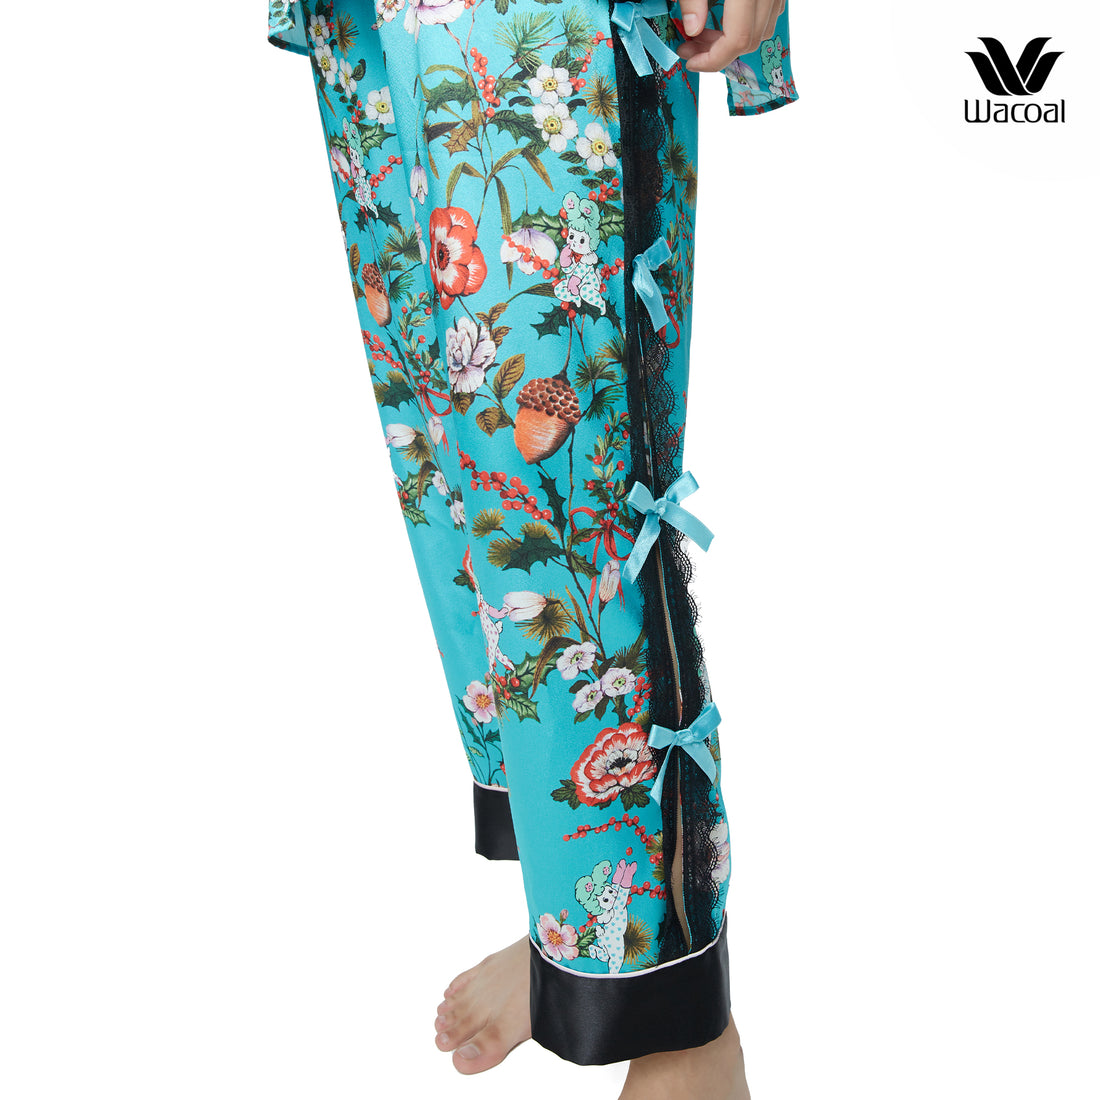 Wacoal x Phannapast: “Candy Wrappers Collection” ชุดนอนเสื้อแขนยาว กางเกงขายาว รุ่น WN7D24  สีน้ำเงิน (BU)